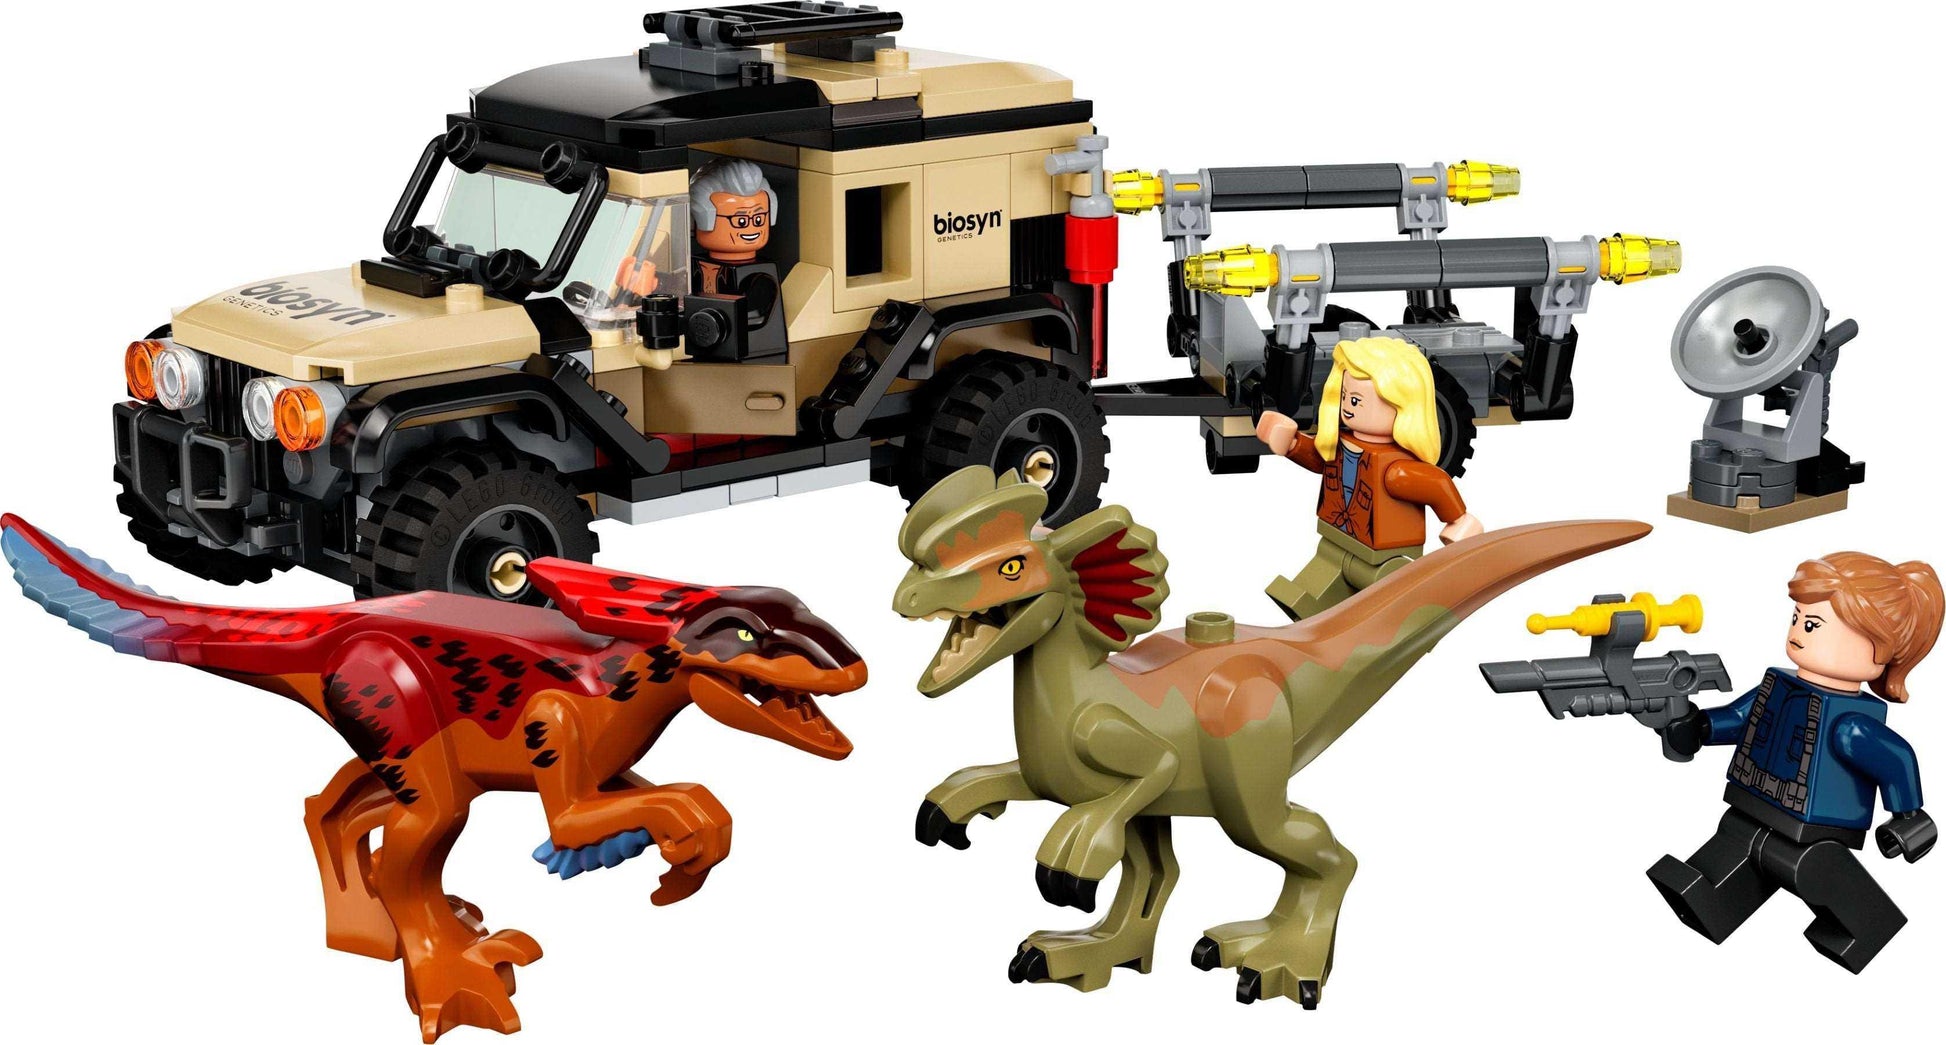 LEGO® Jurassic World 76951 Pyroraptor & Dilophosaurus Transport - 254 Teile - Peer Online Shop